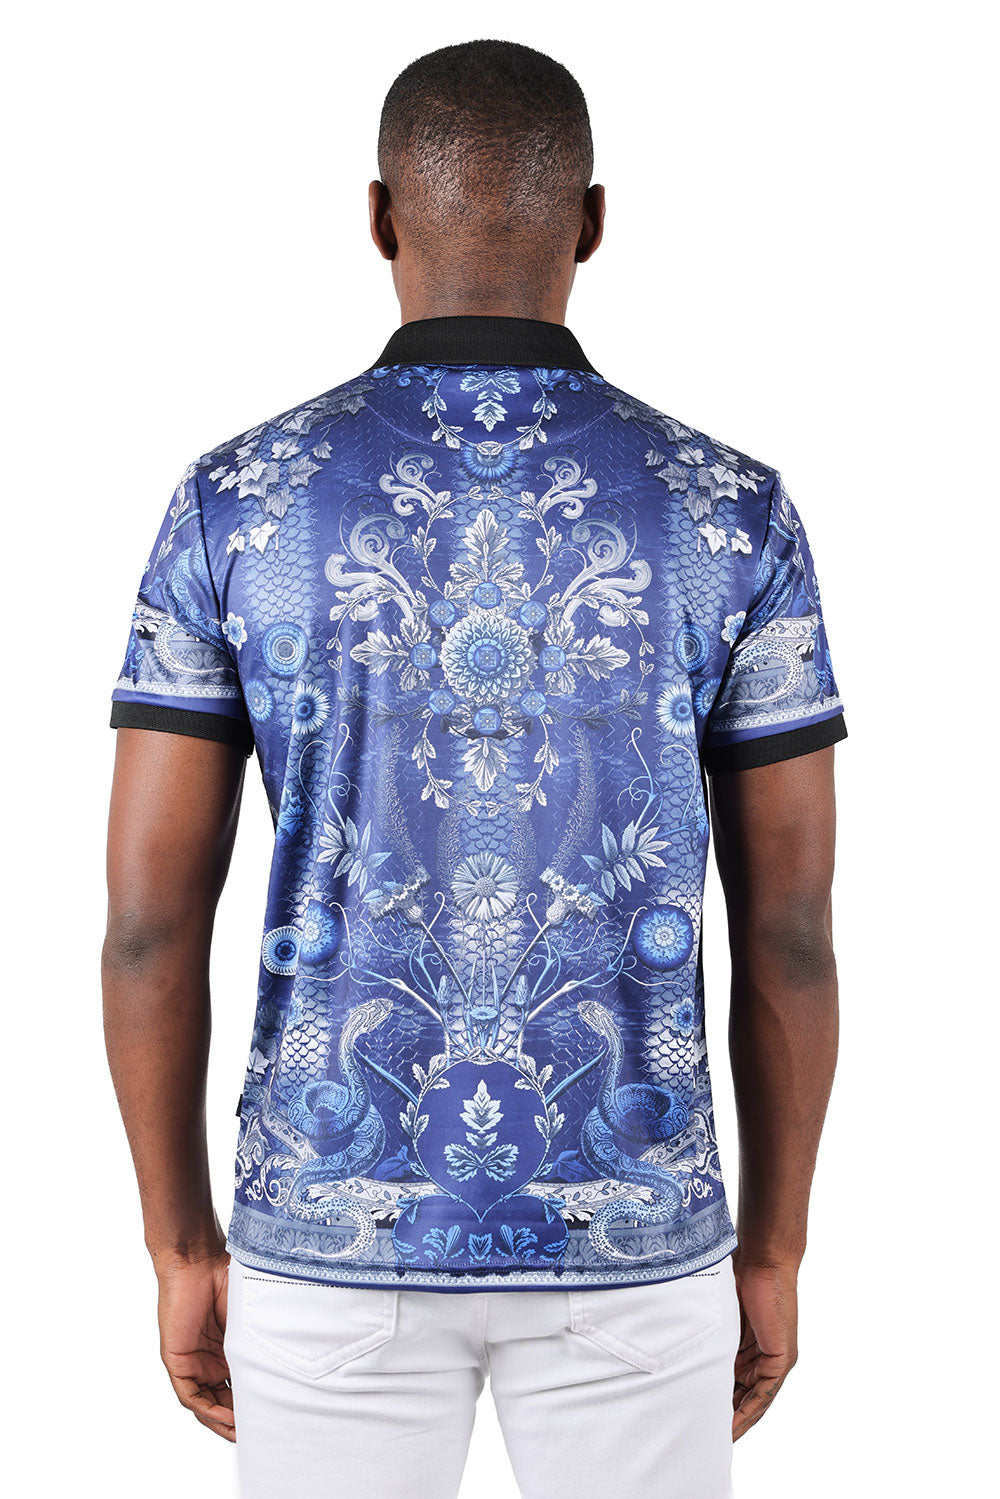 Barabas men's Floral Snake Skin Pattern Graphic Tee Polo Shirts 3PSP08 Navy